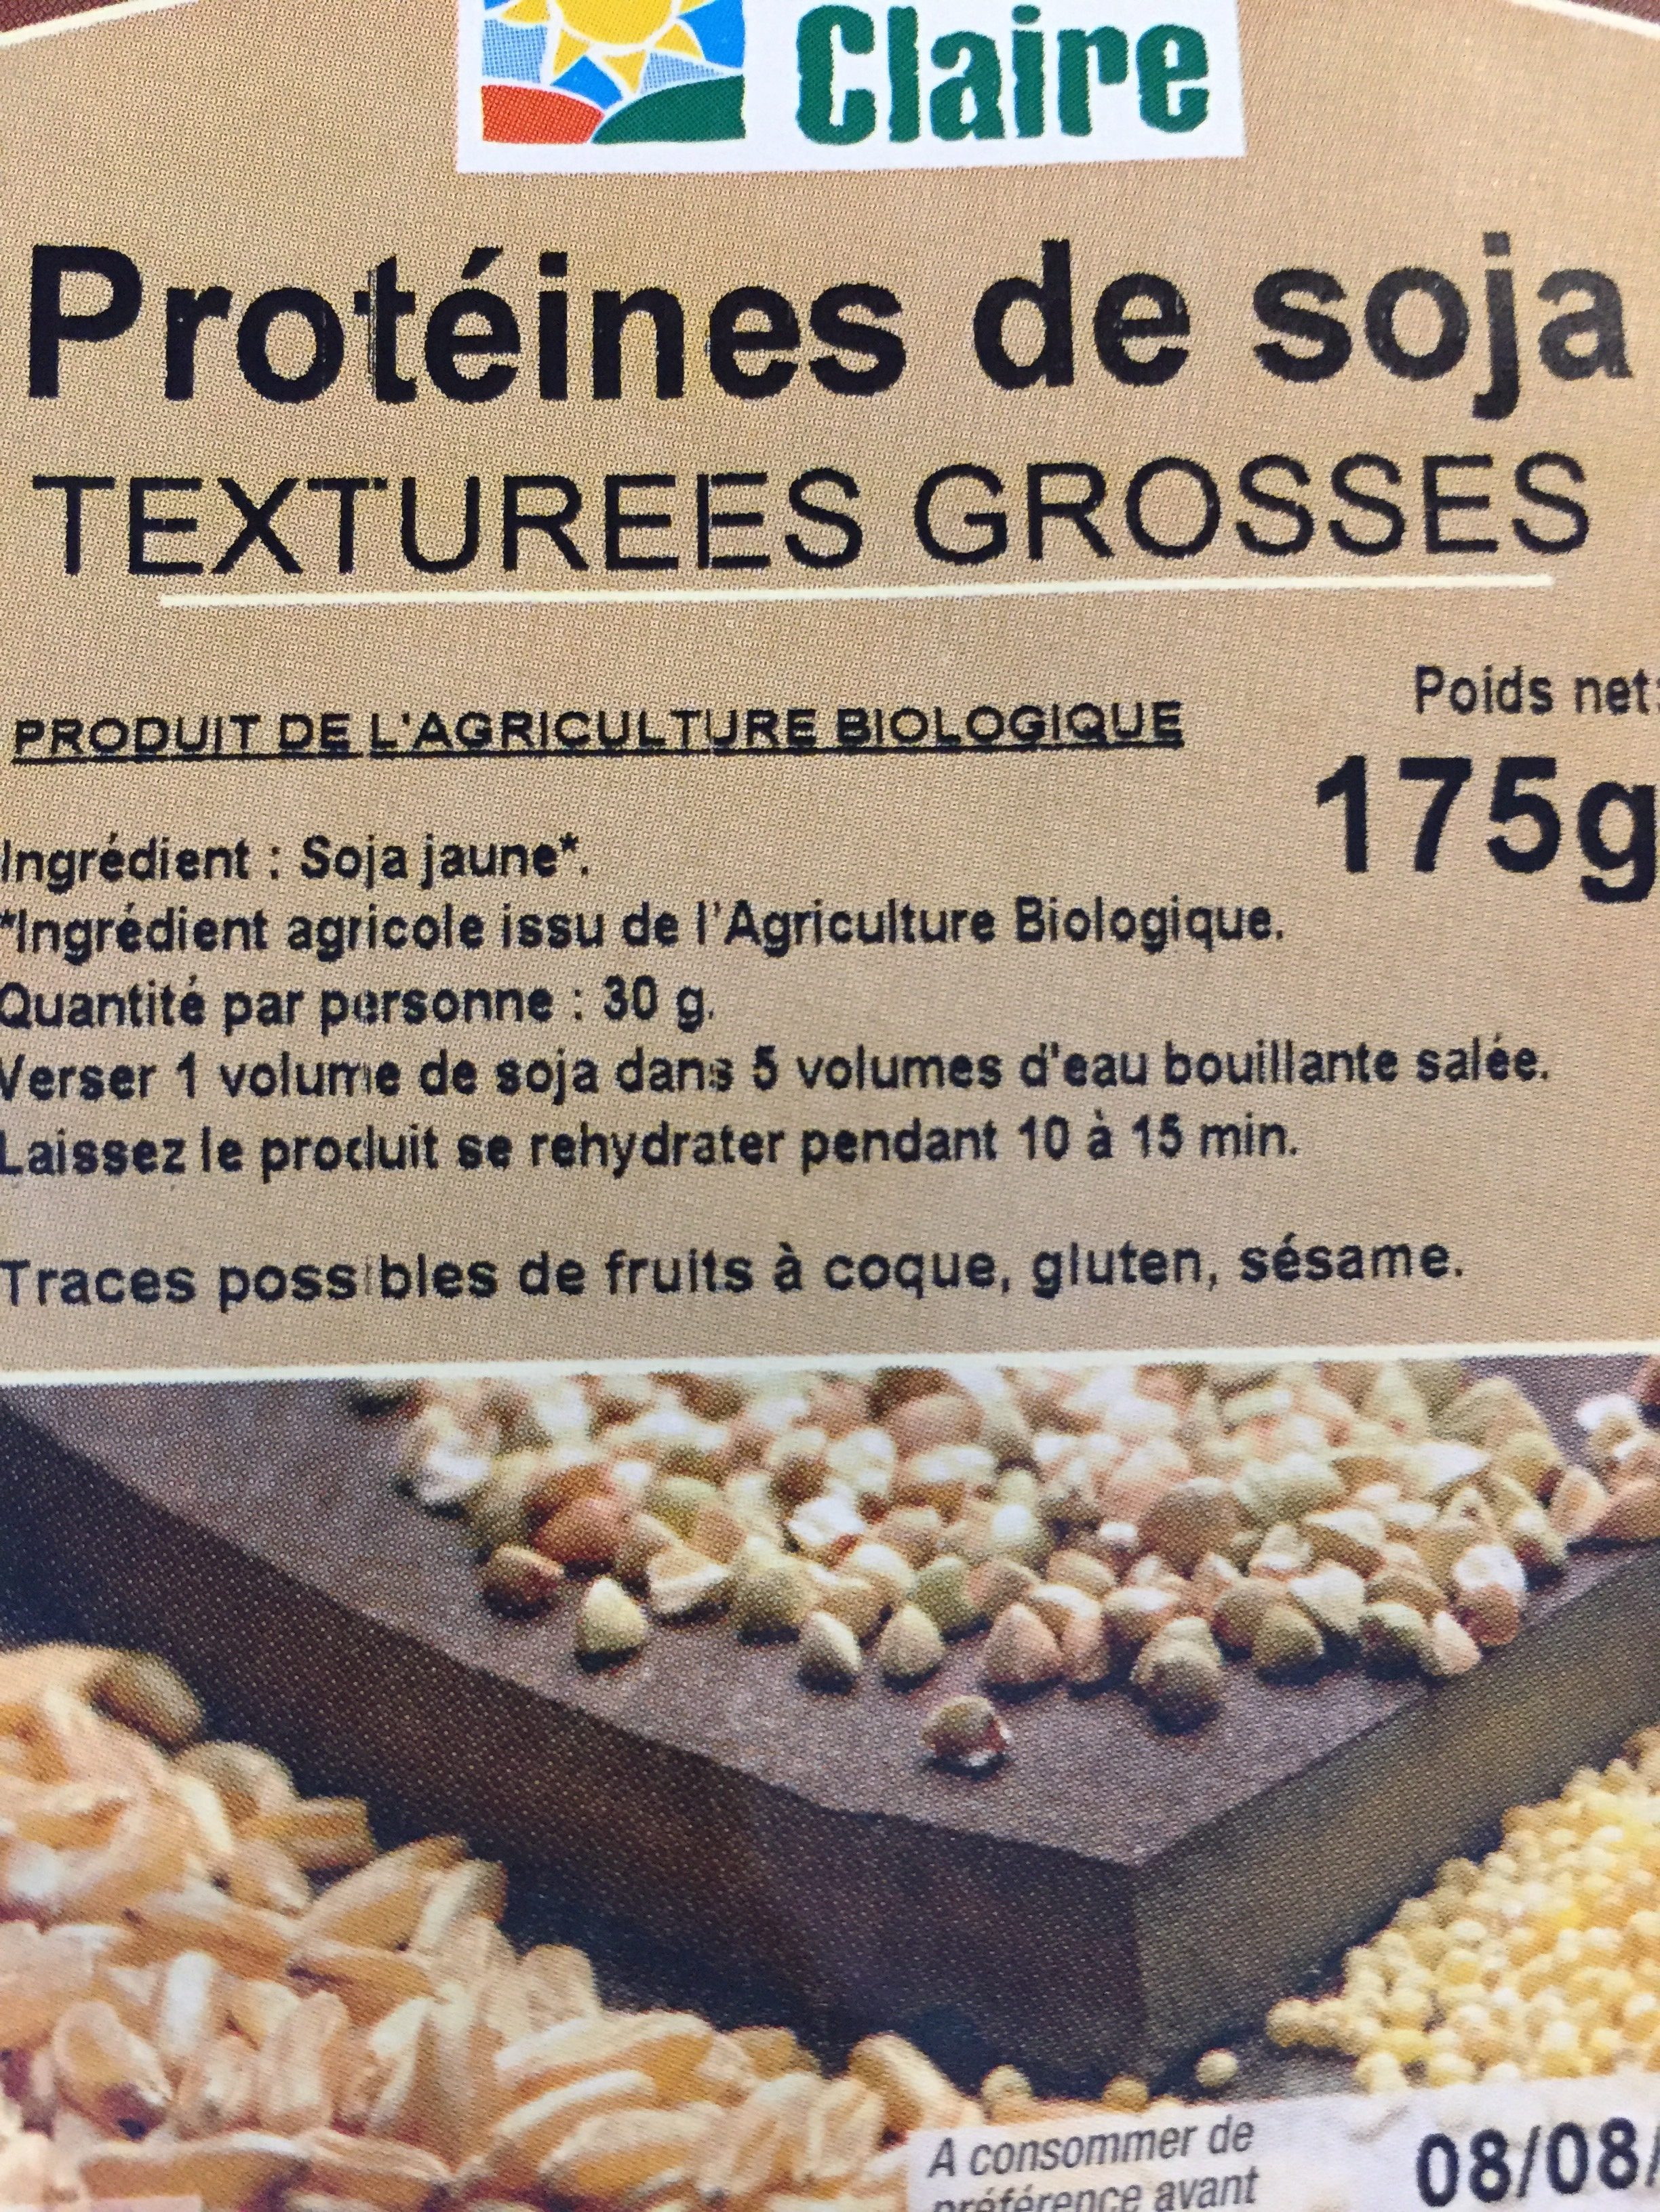 Protéines de soja grosses - Ingrédients